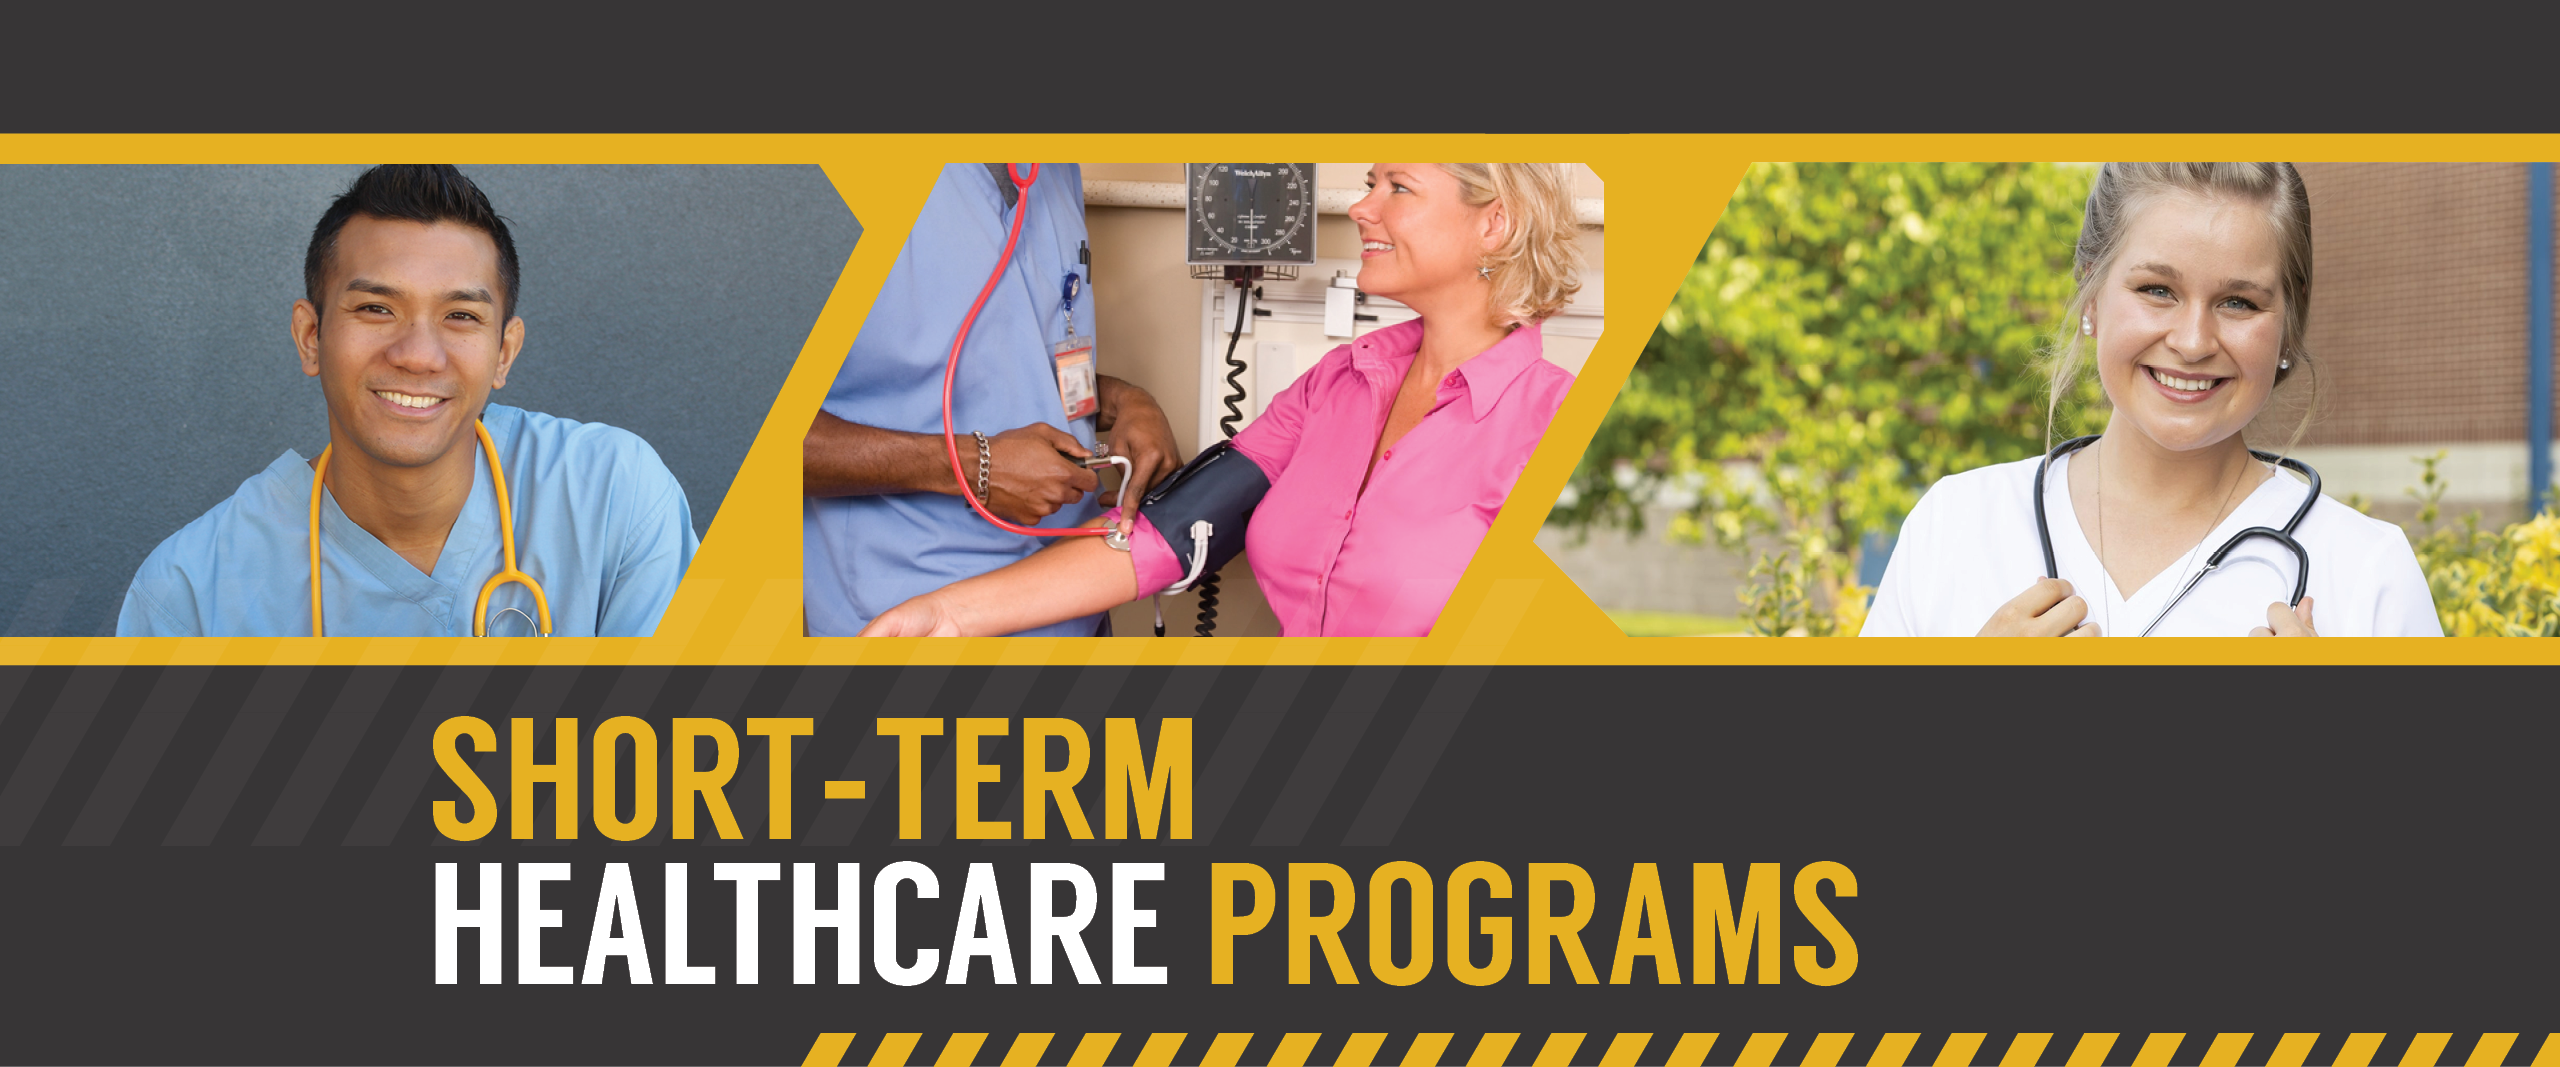 Healthcare - Short Term Programs